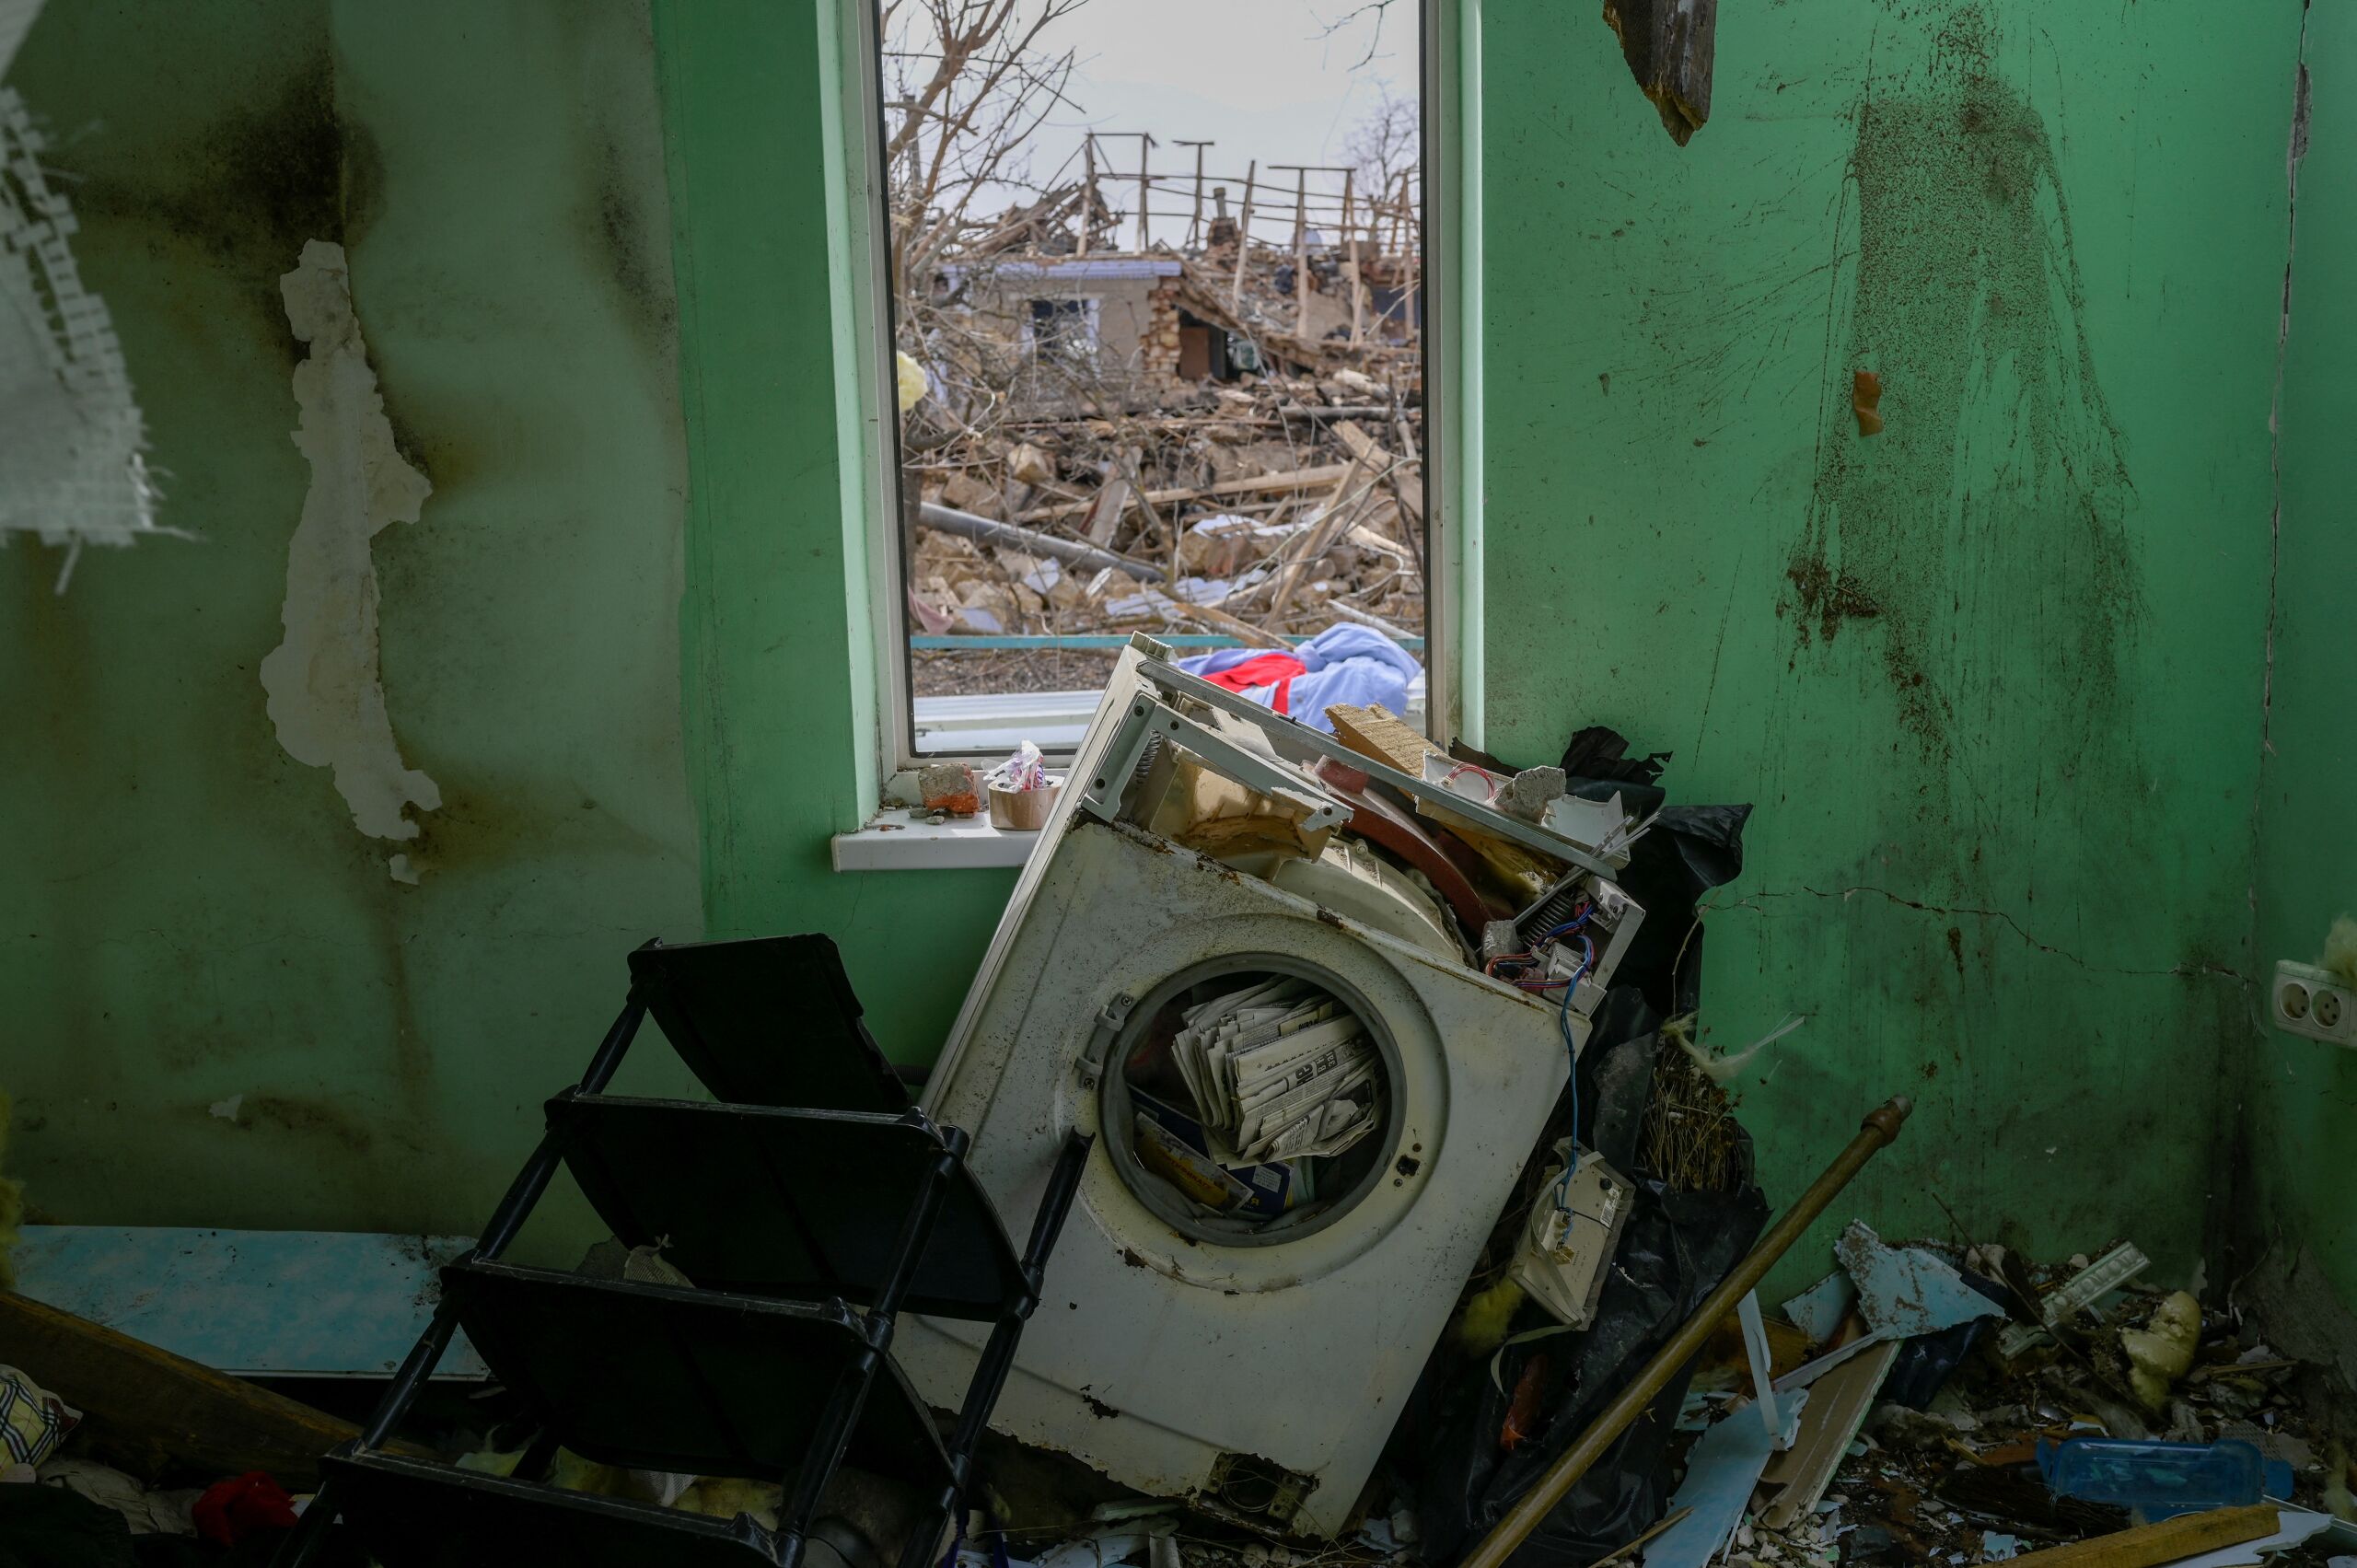 Verwoeste woning in de buurt van Mykolaiv